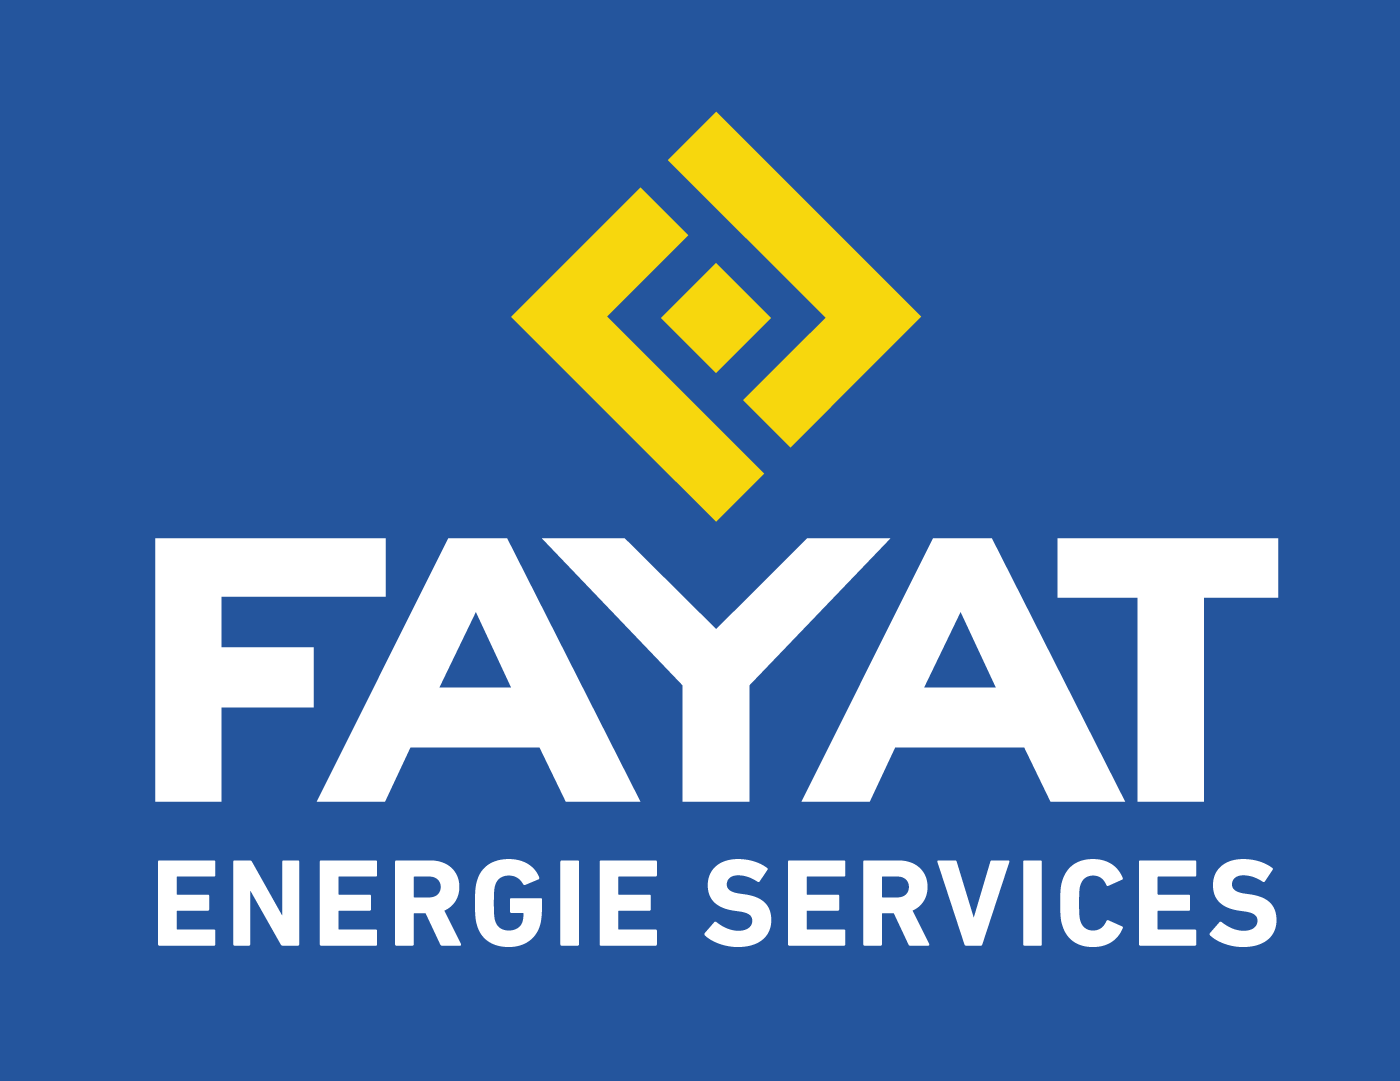 Fayat energie services